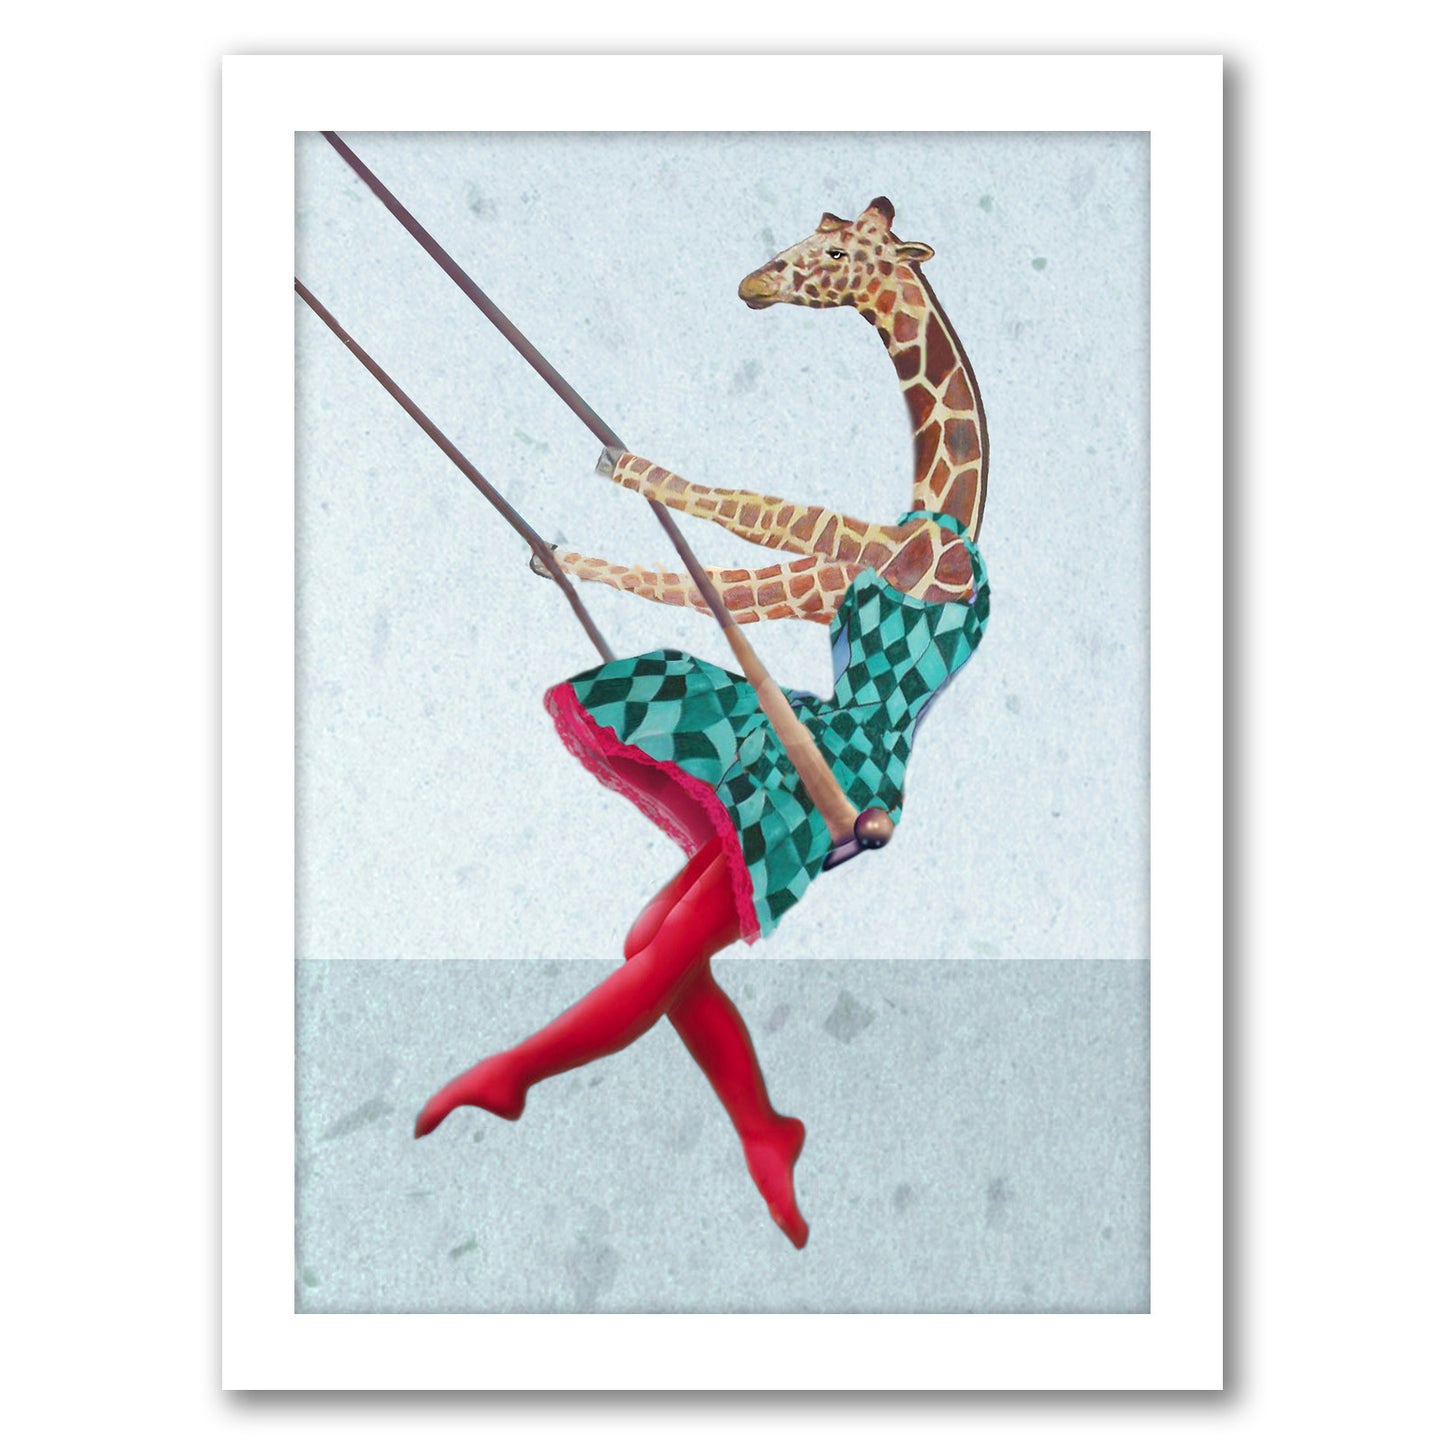 Giraffe On A Swing Right By Coco De Paris - Framed Print